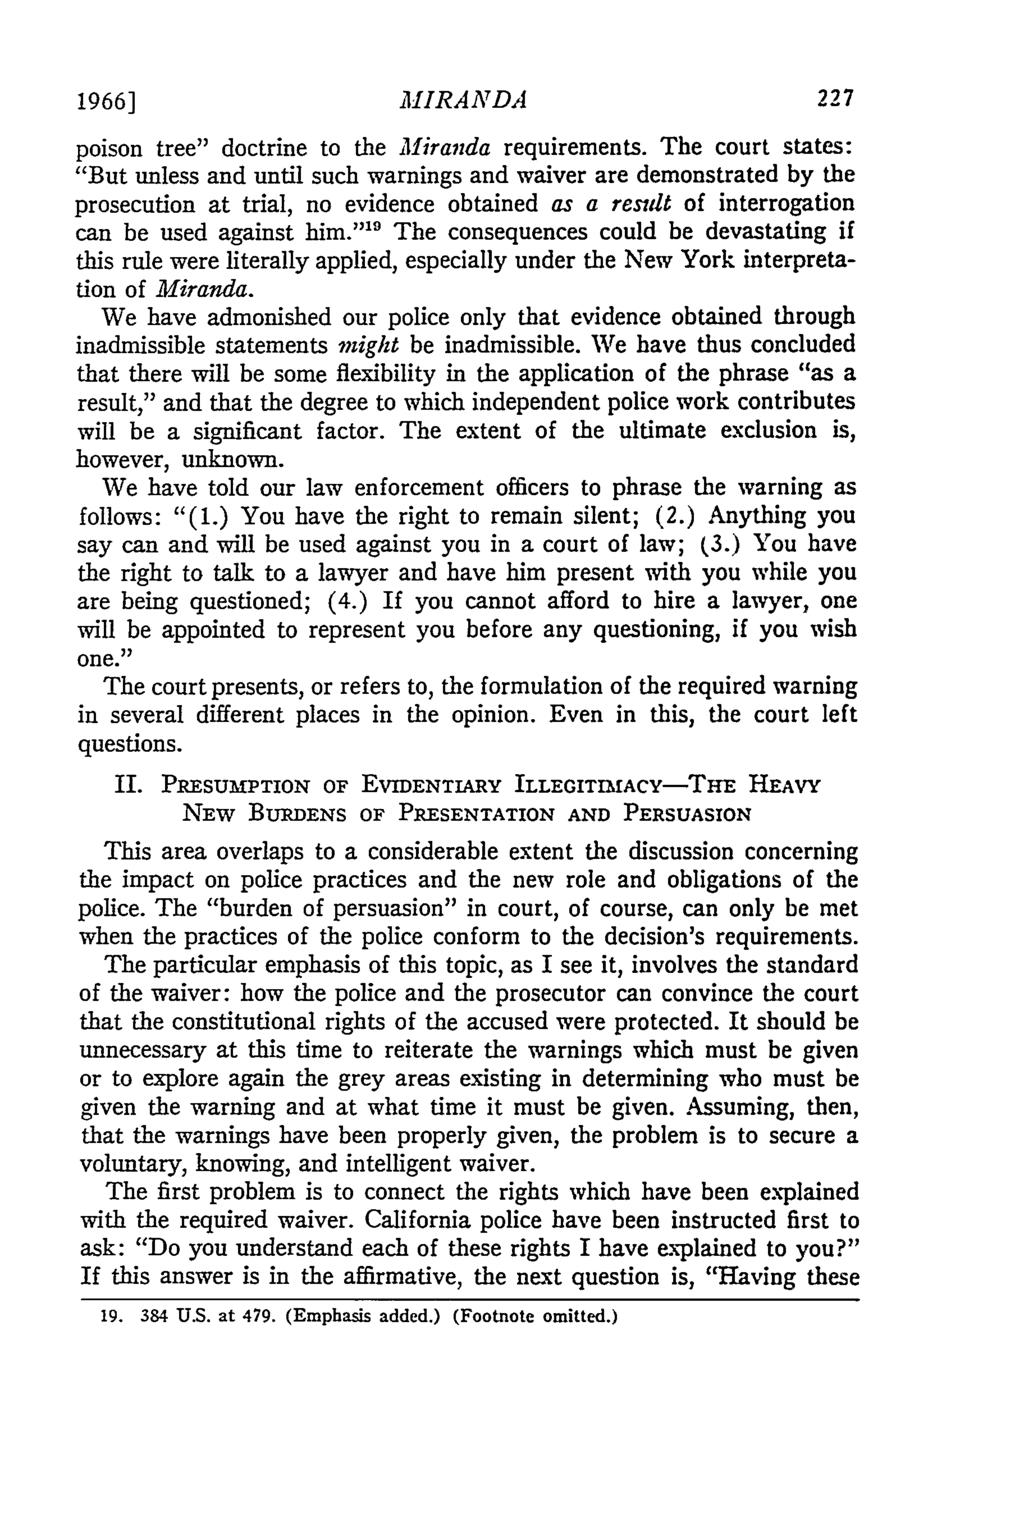 1966] MIRANDA poison tree" doctrine to the Miranda requirements.